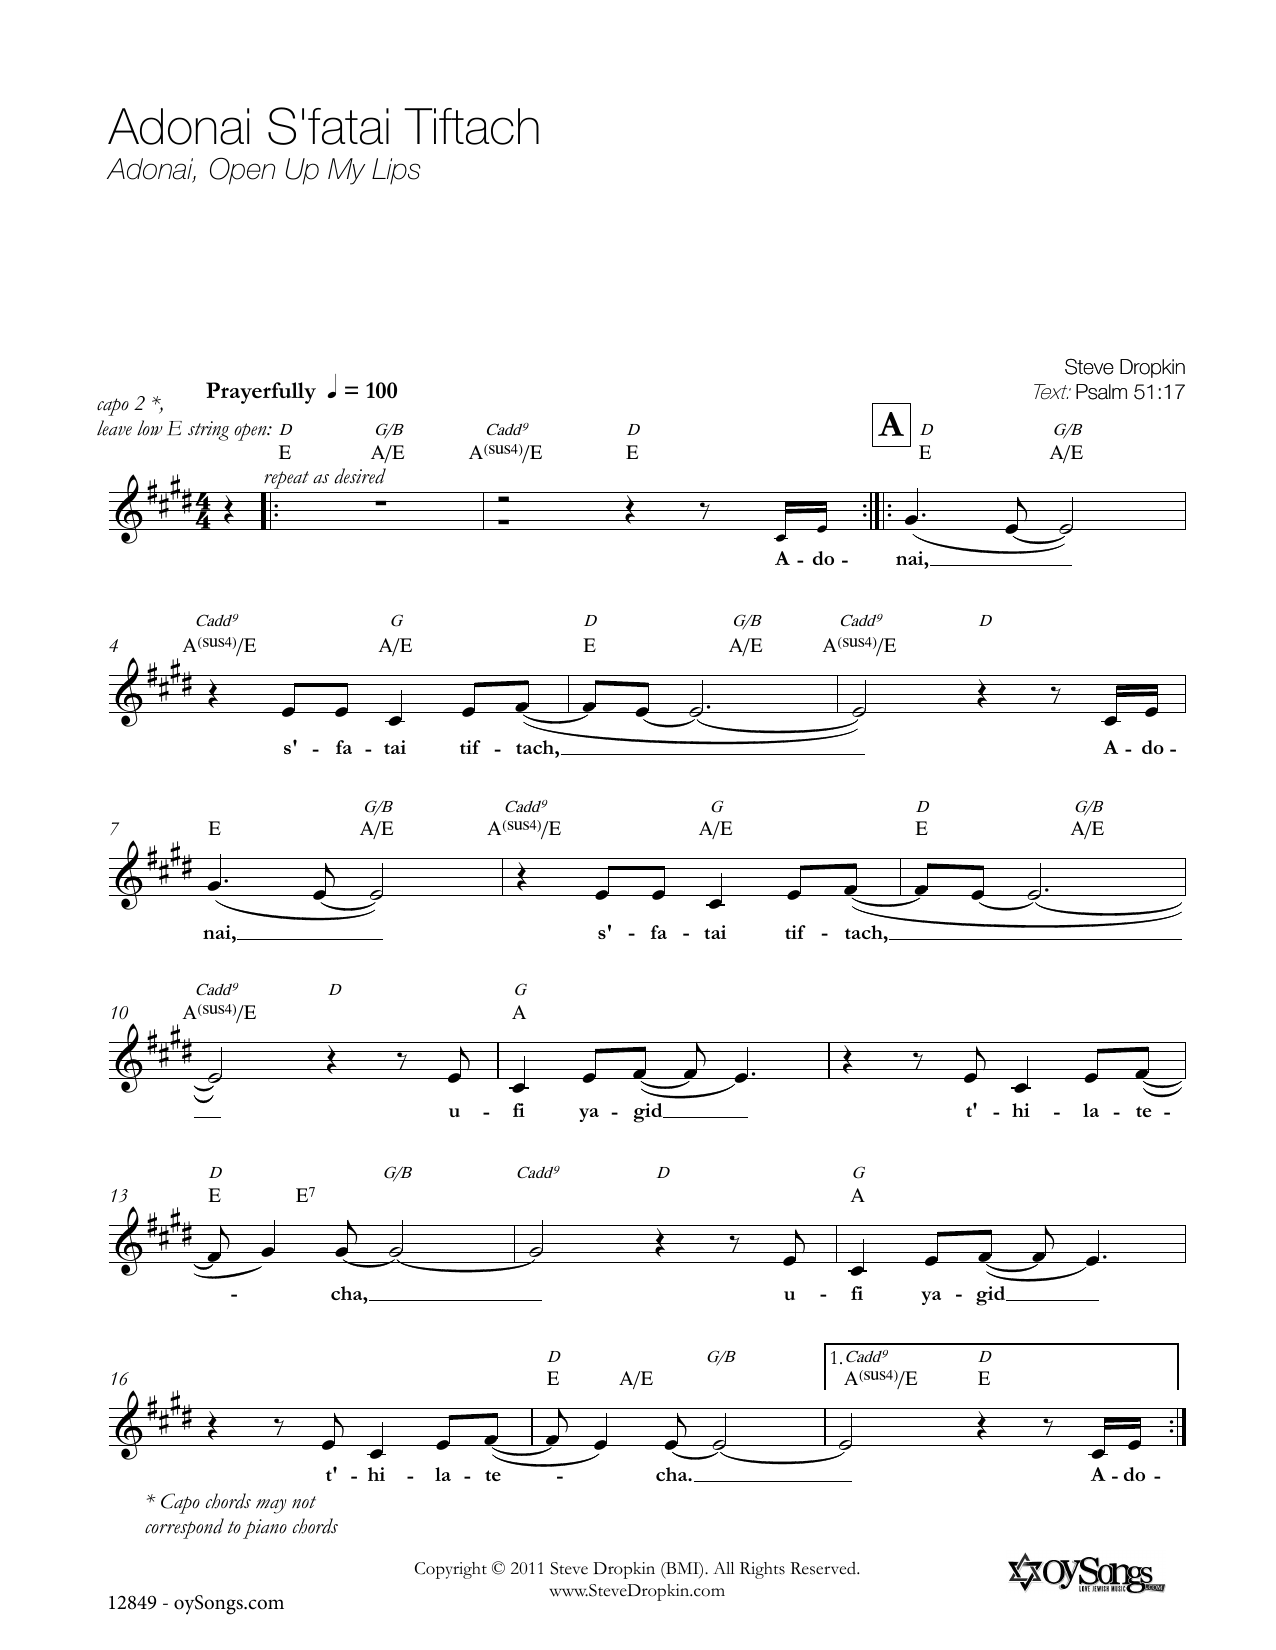 Steve Dropkin Adonai S'fatai Tiftach Sheet Music Notes & Chords for Piano, Vocal & Guitar (Right-Hand Melody) - Download or Print PDF